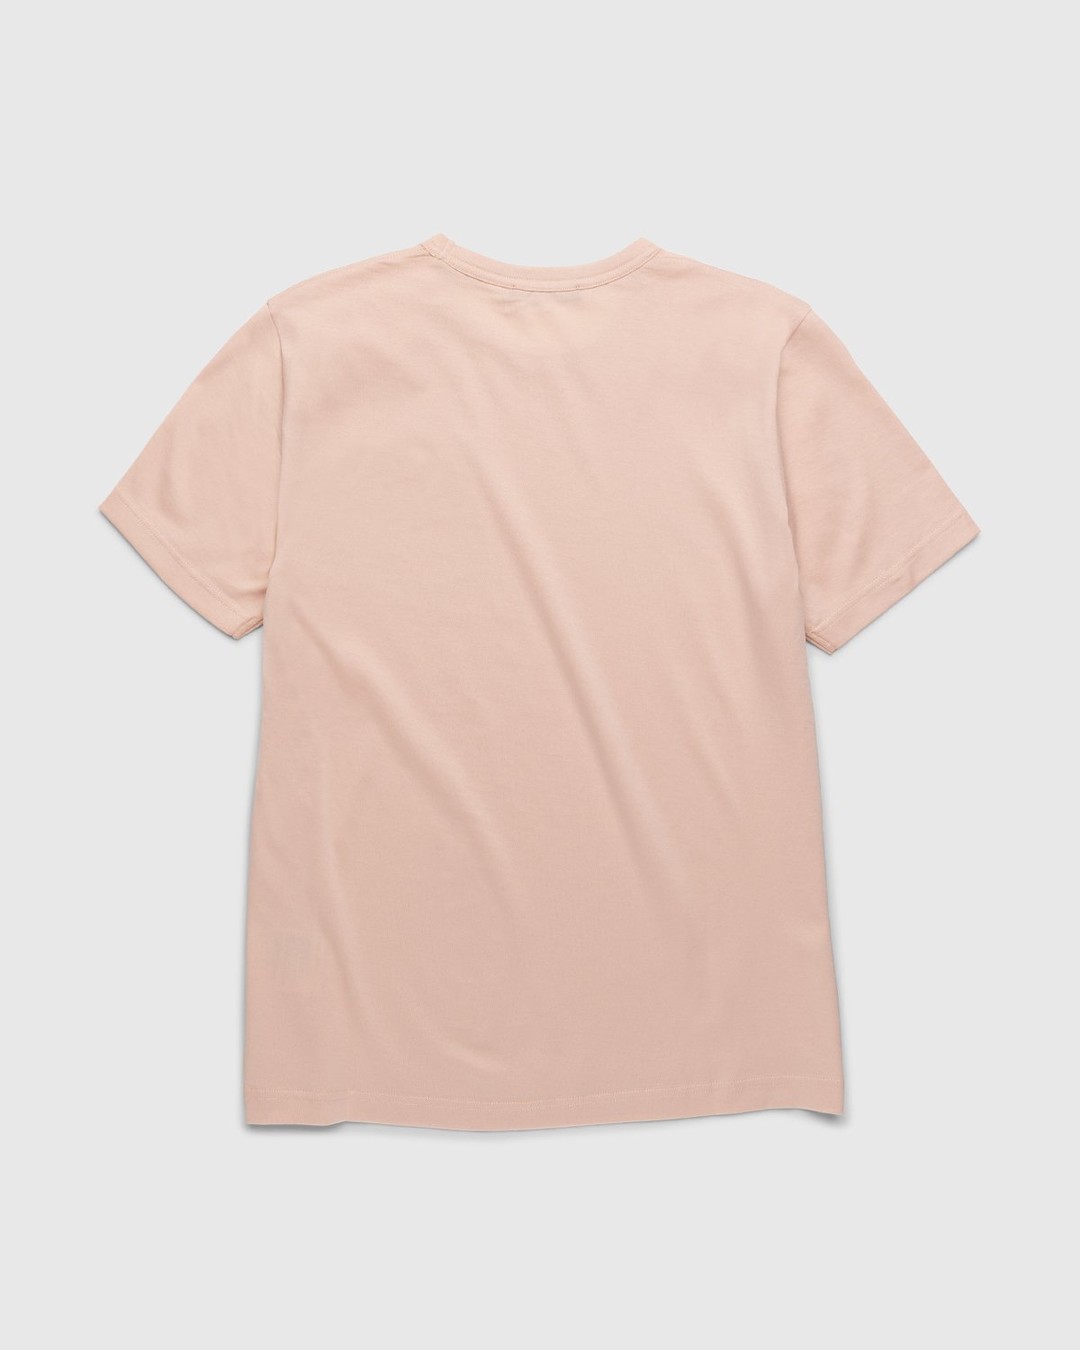 Acne Studios – Slim Fit T-Shirt Powder Pink - T-Shirts - Pink - Image 2